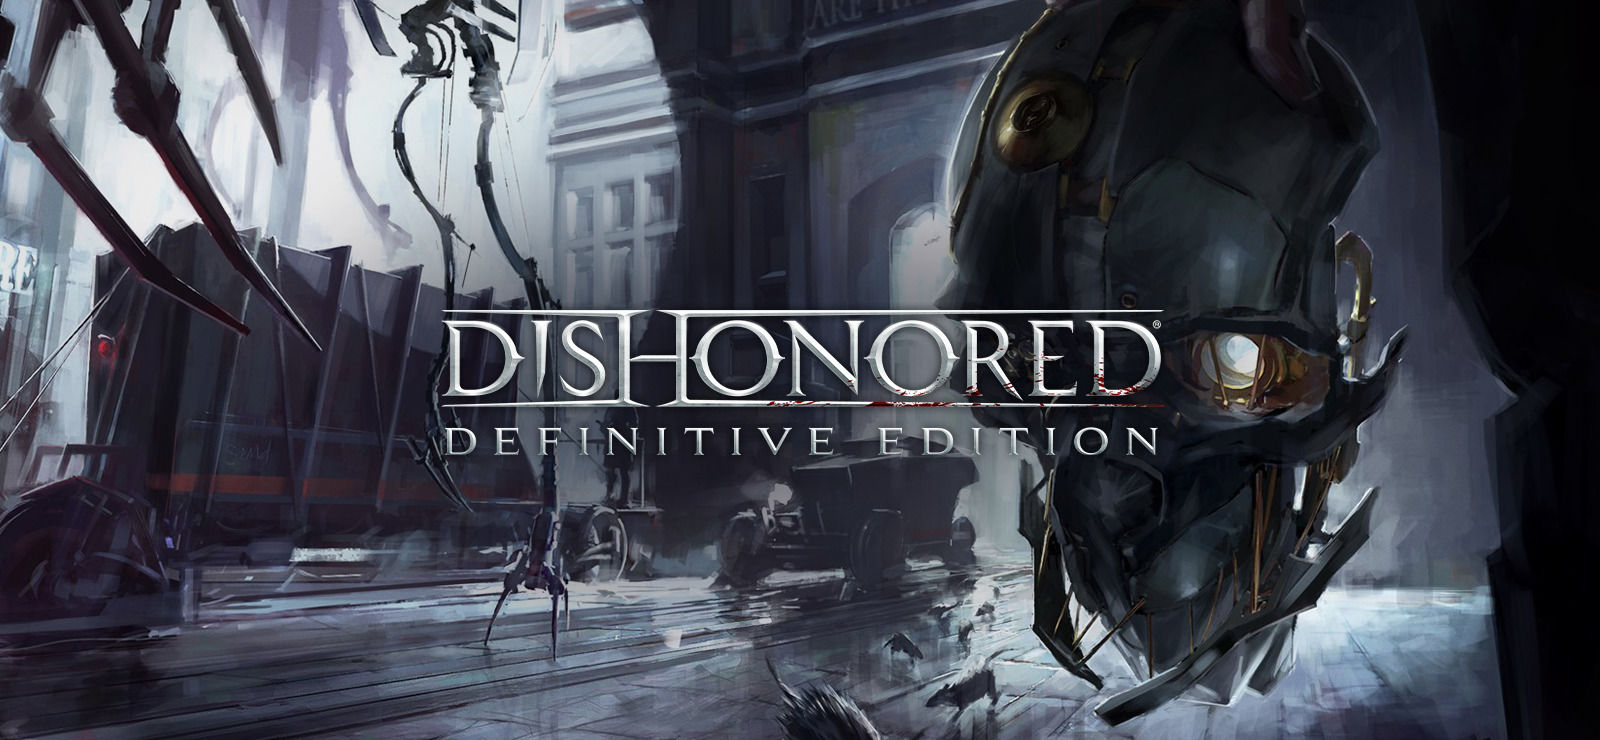 179 TL'lik Dishonored: Definitive Edition ücretsiz oldu